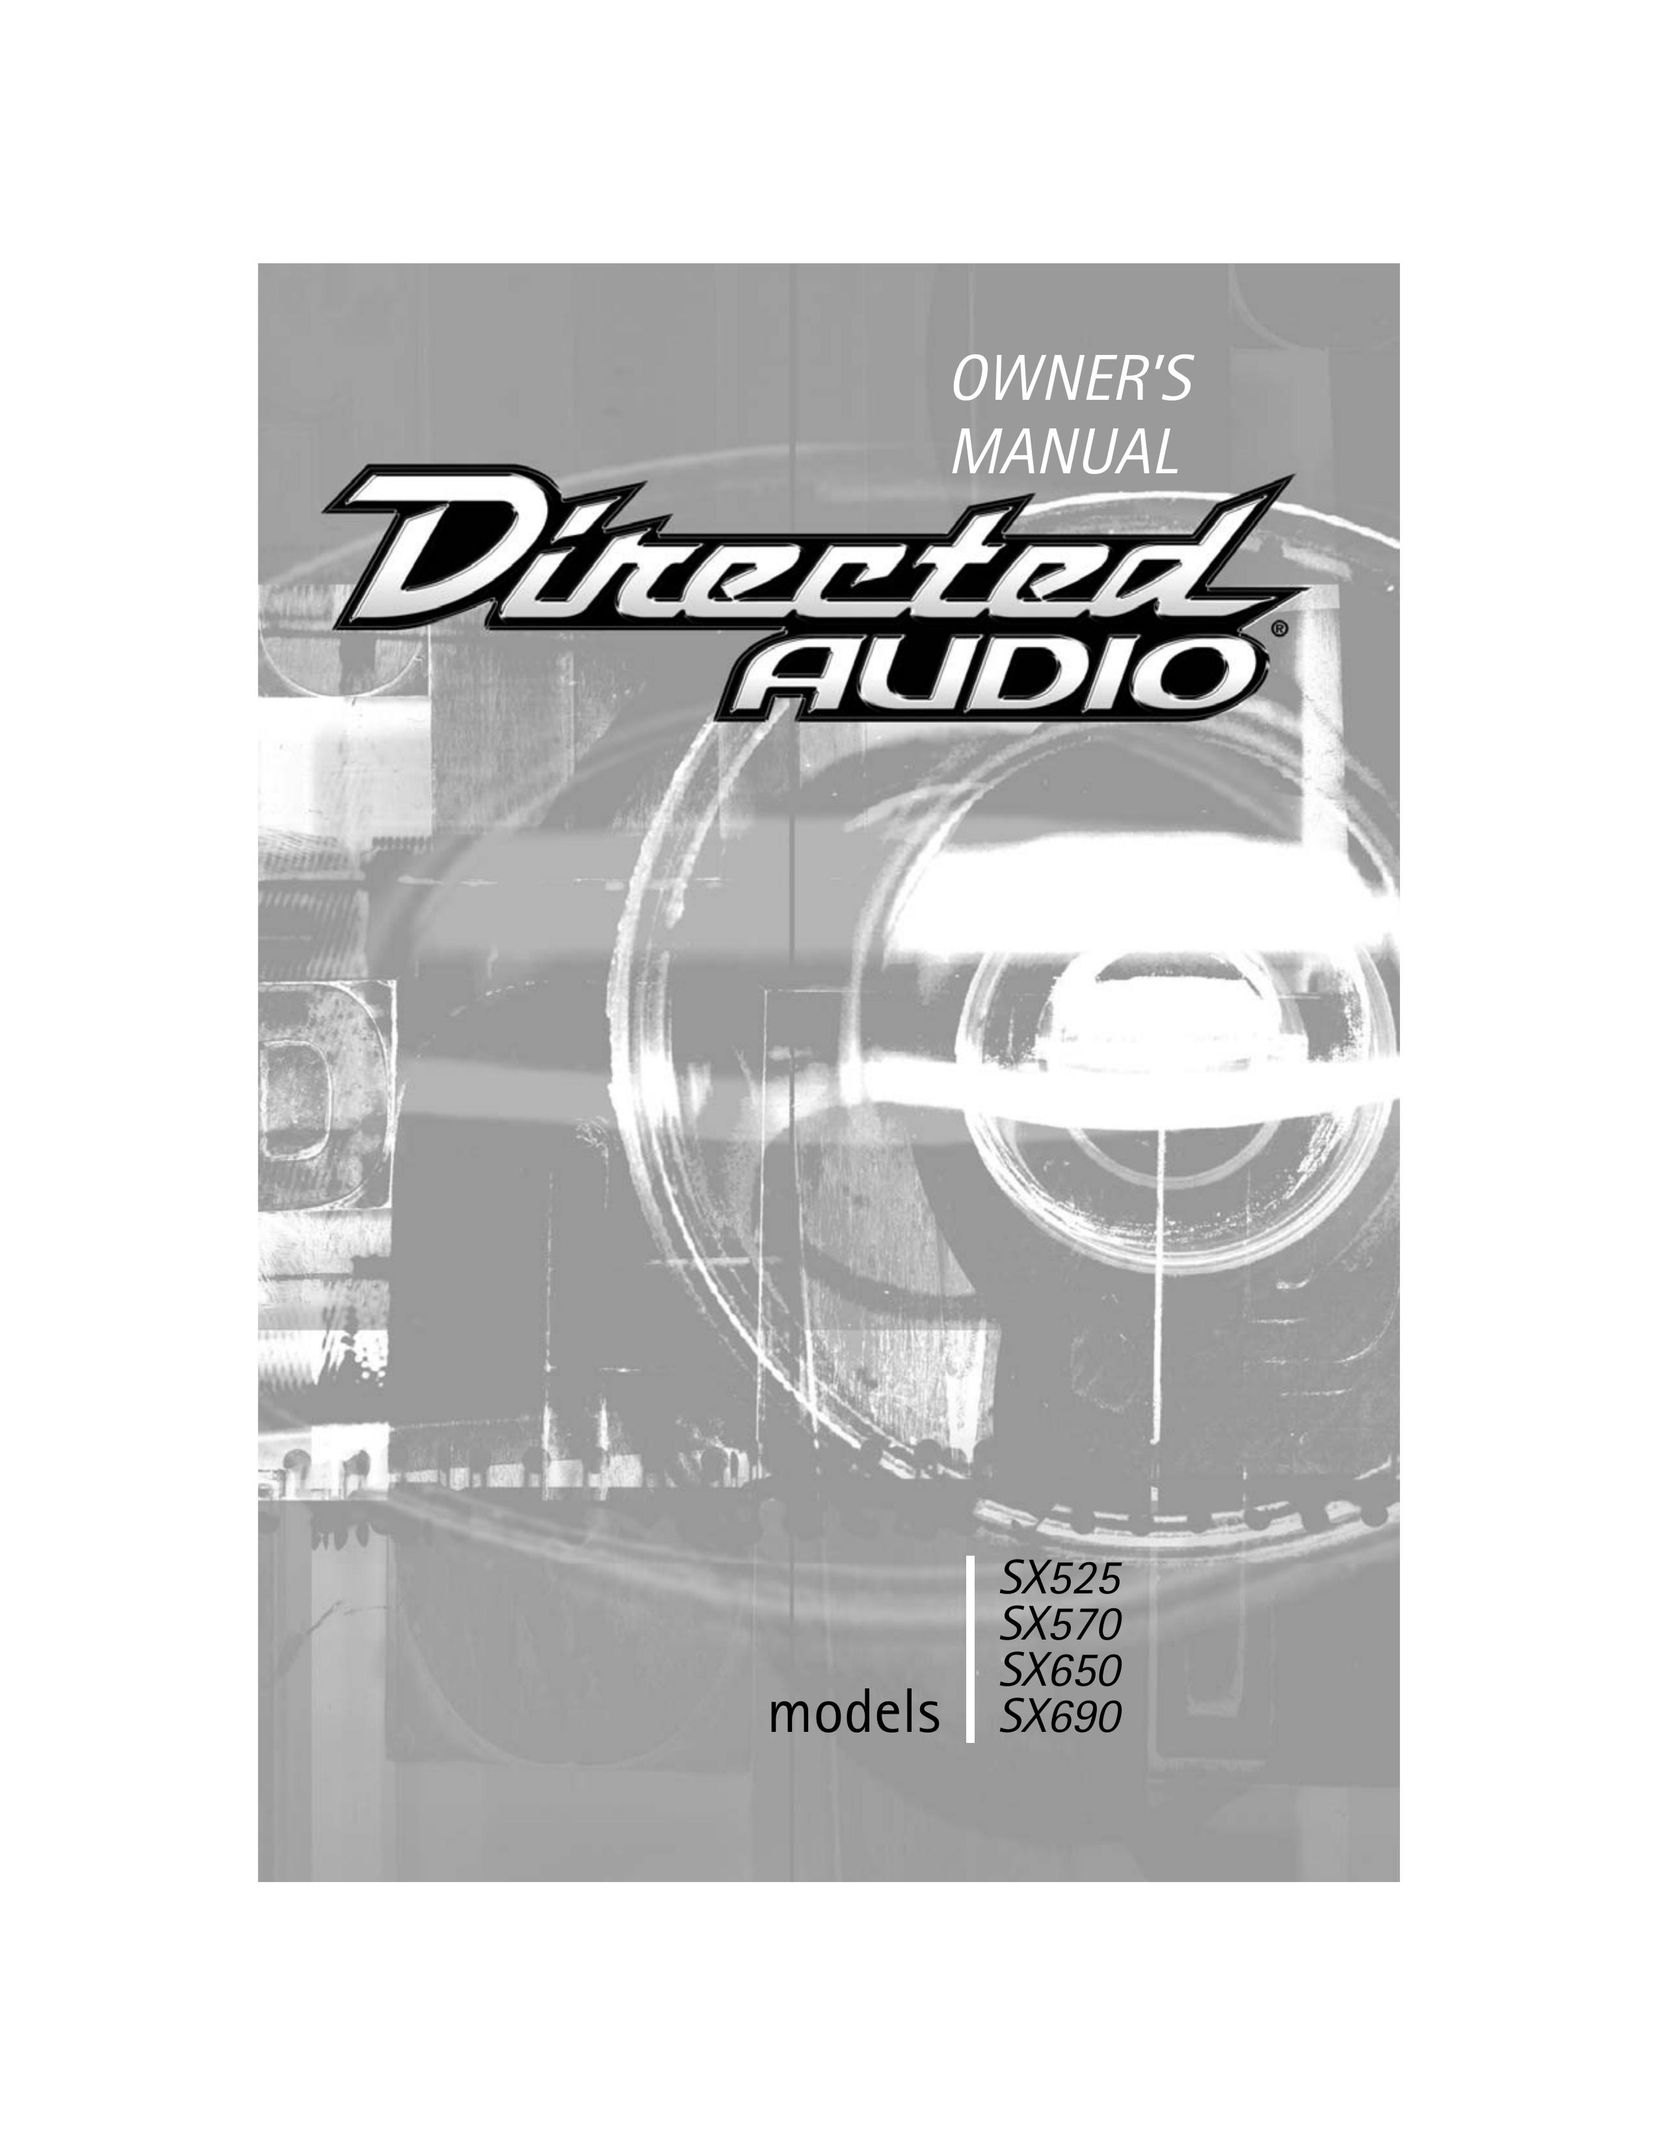 Directed Audio SX570 Car Speaker User Manual